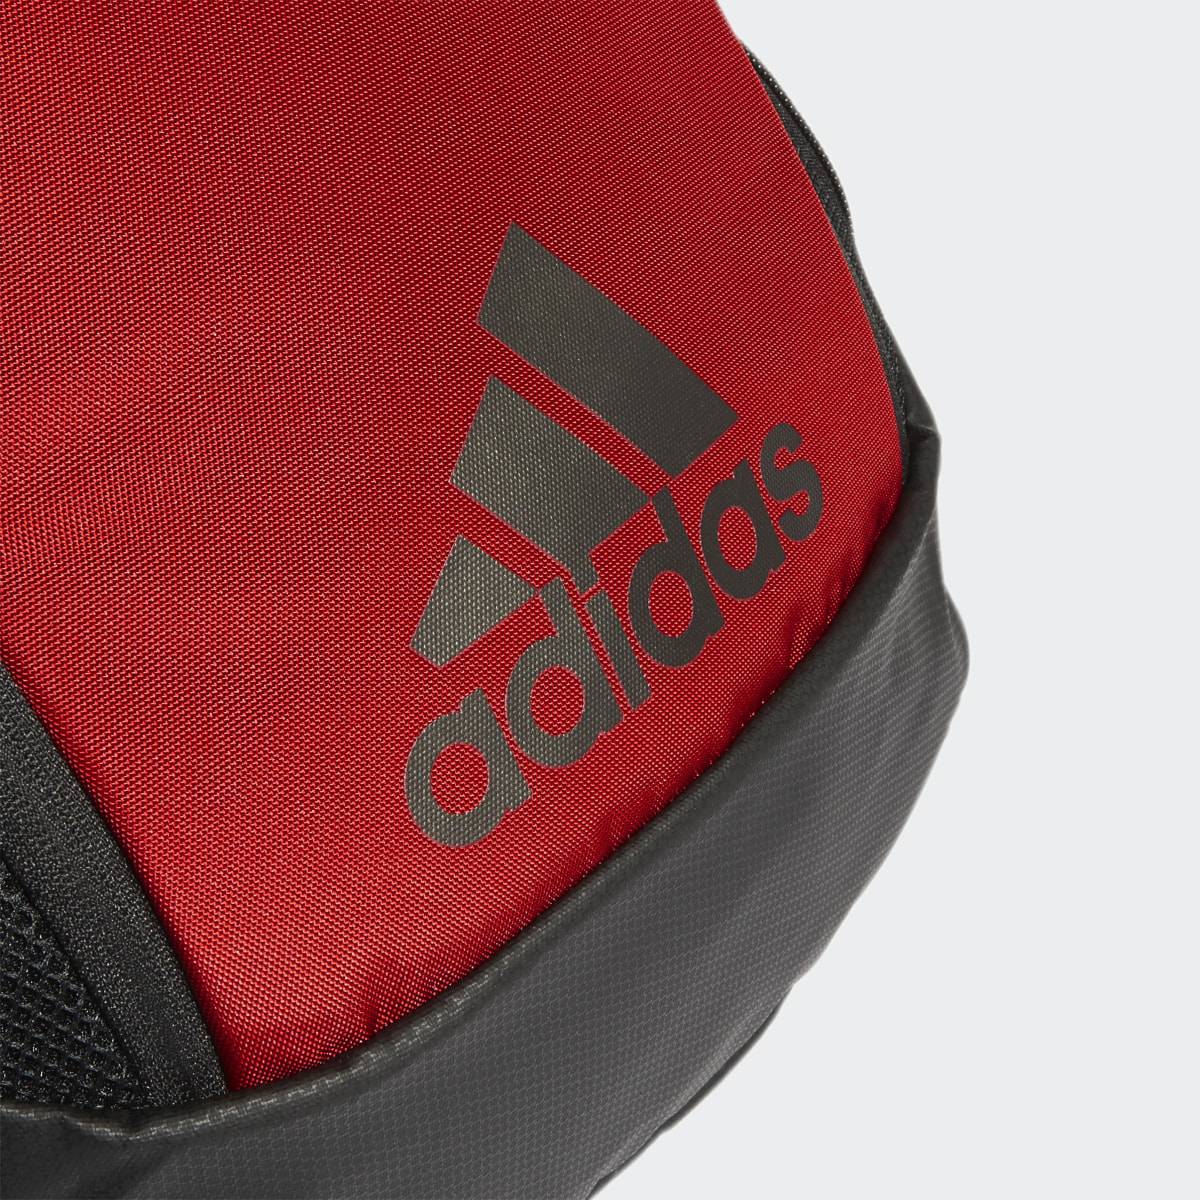 Adidas 5-Star Team Backpack. 7